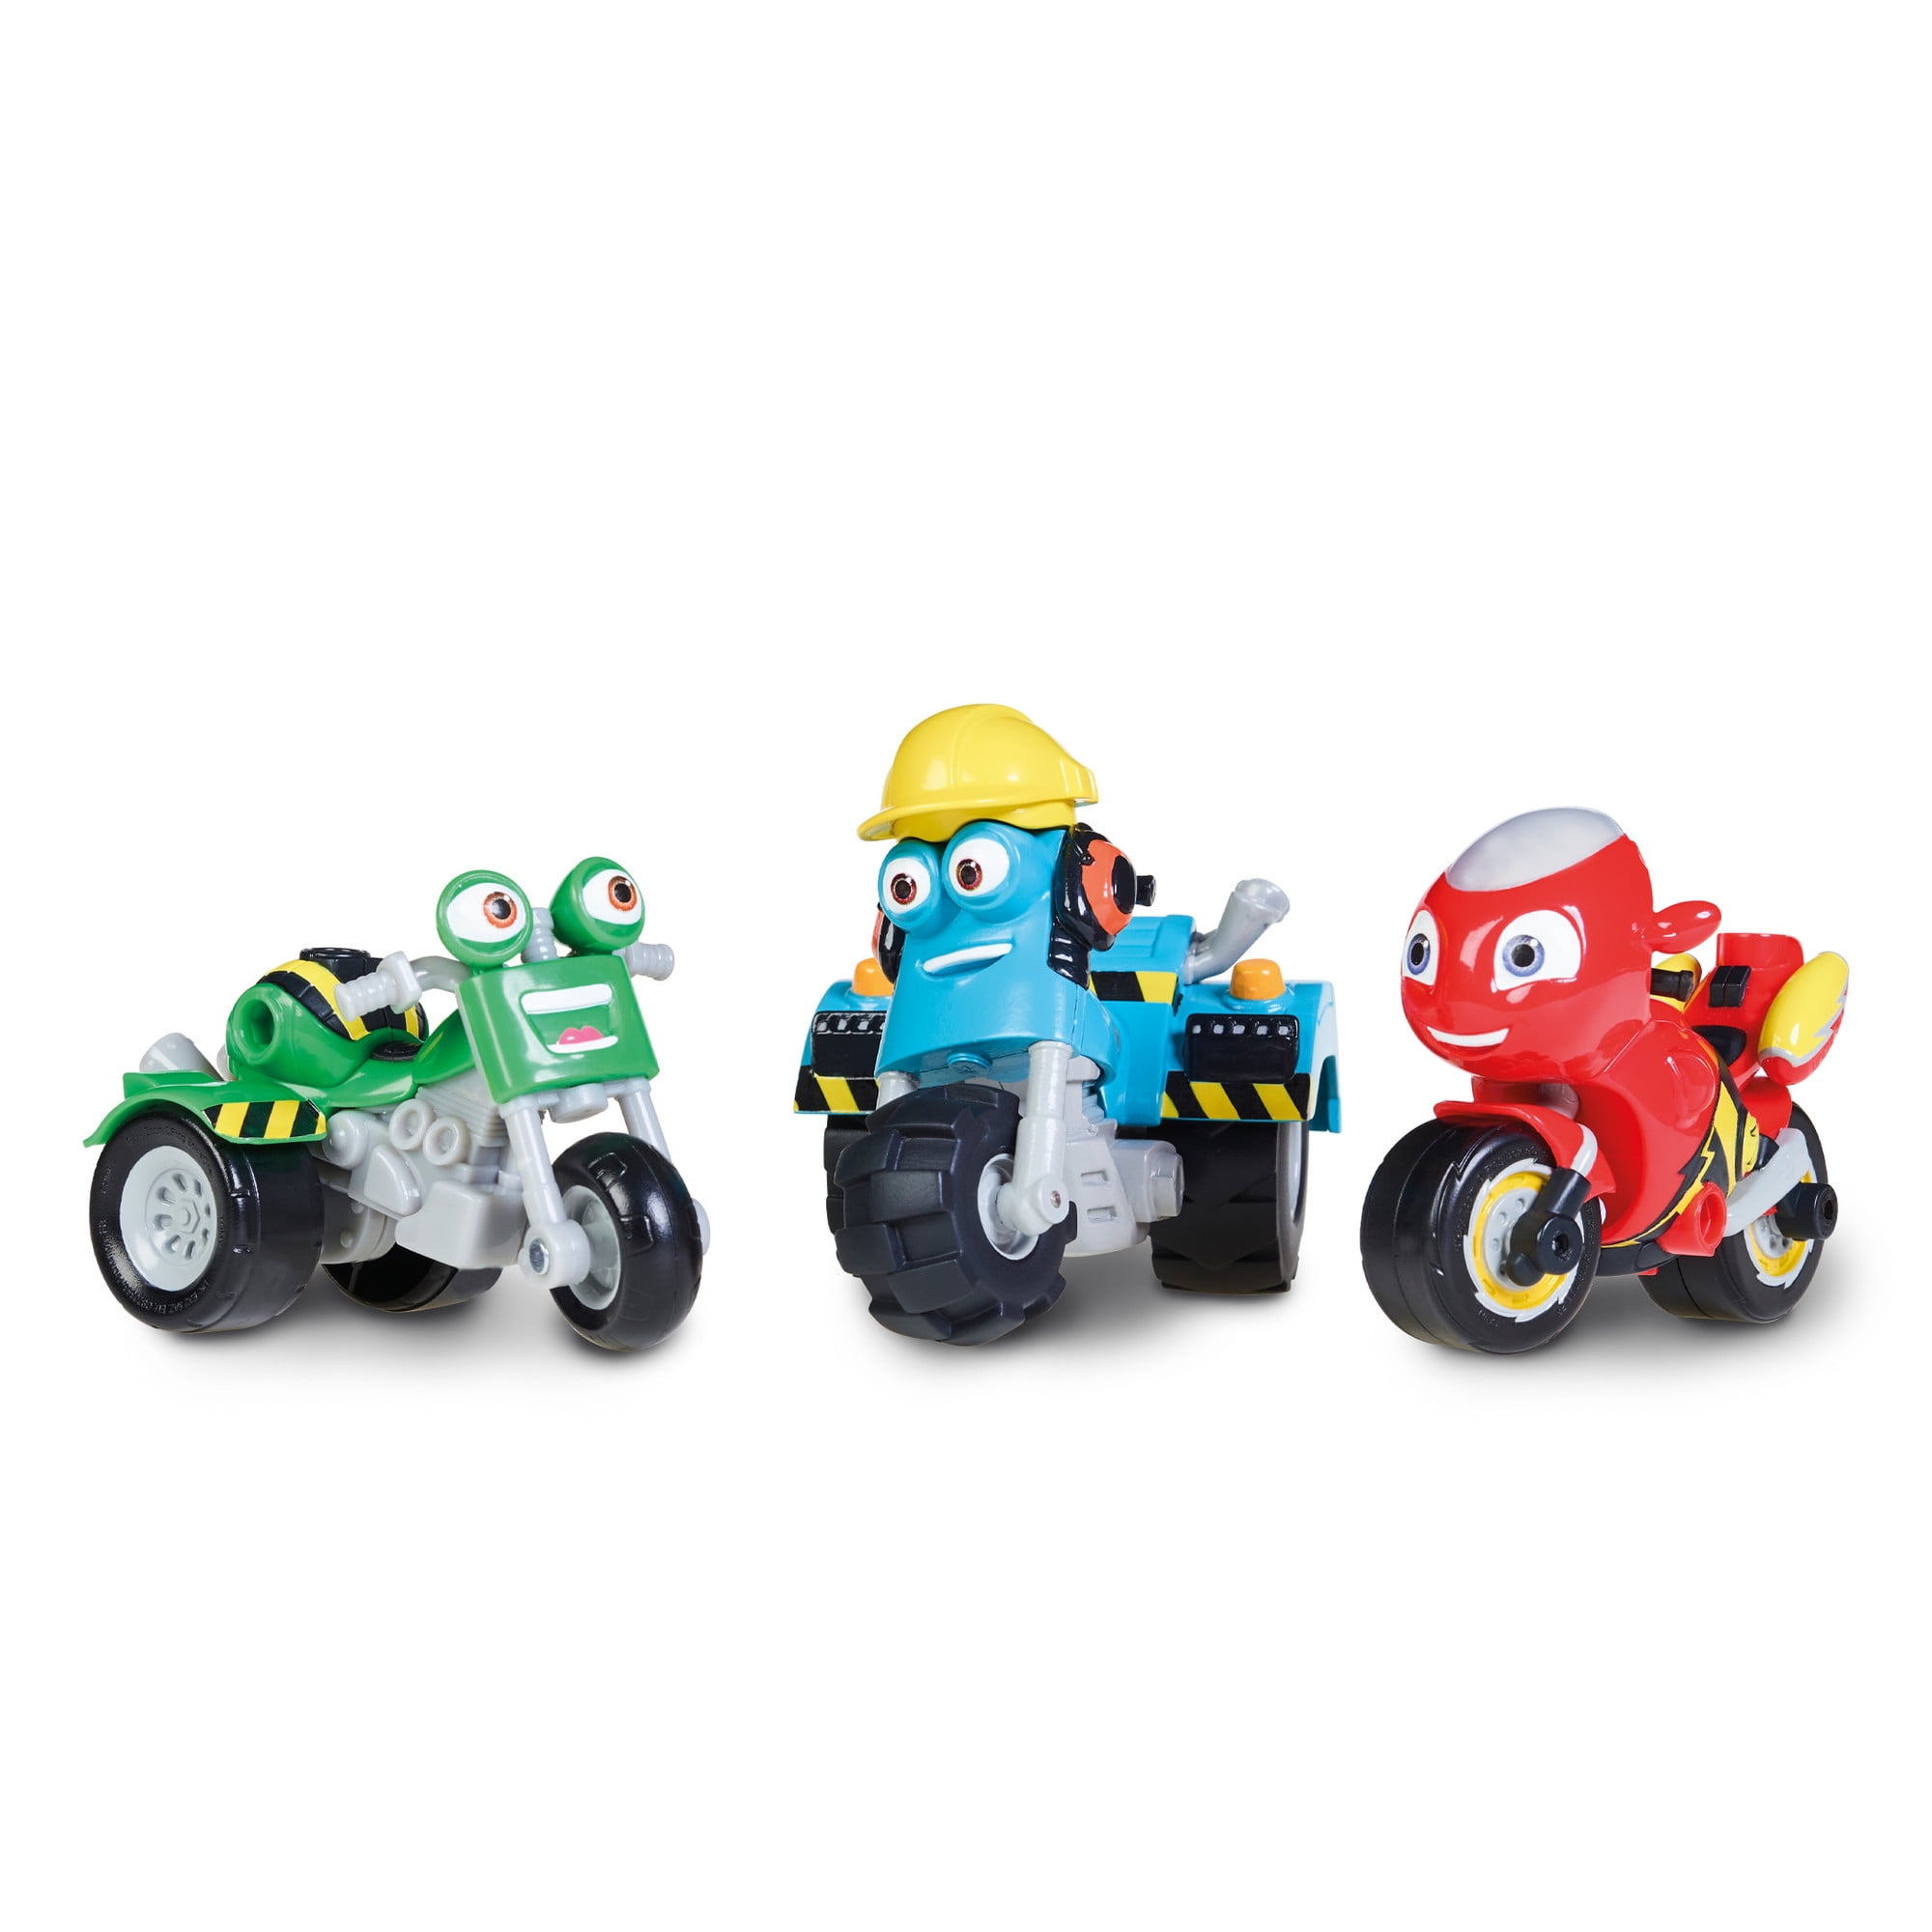 Ricky Zoom: Jake Rumbler Adventure Multipack - 3 & 4 Inch Motorcycle Action Figures – Free-Wheeling, Free Standing Toy Bikes for Preschool Play